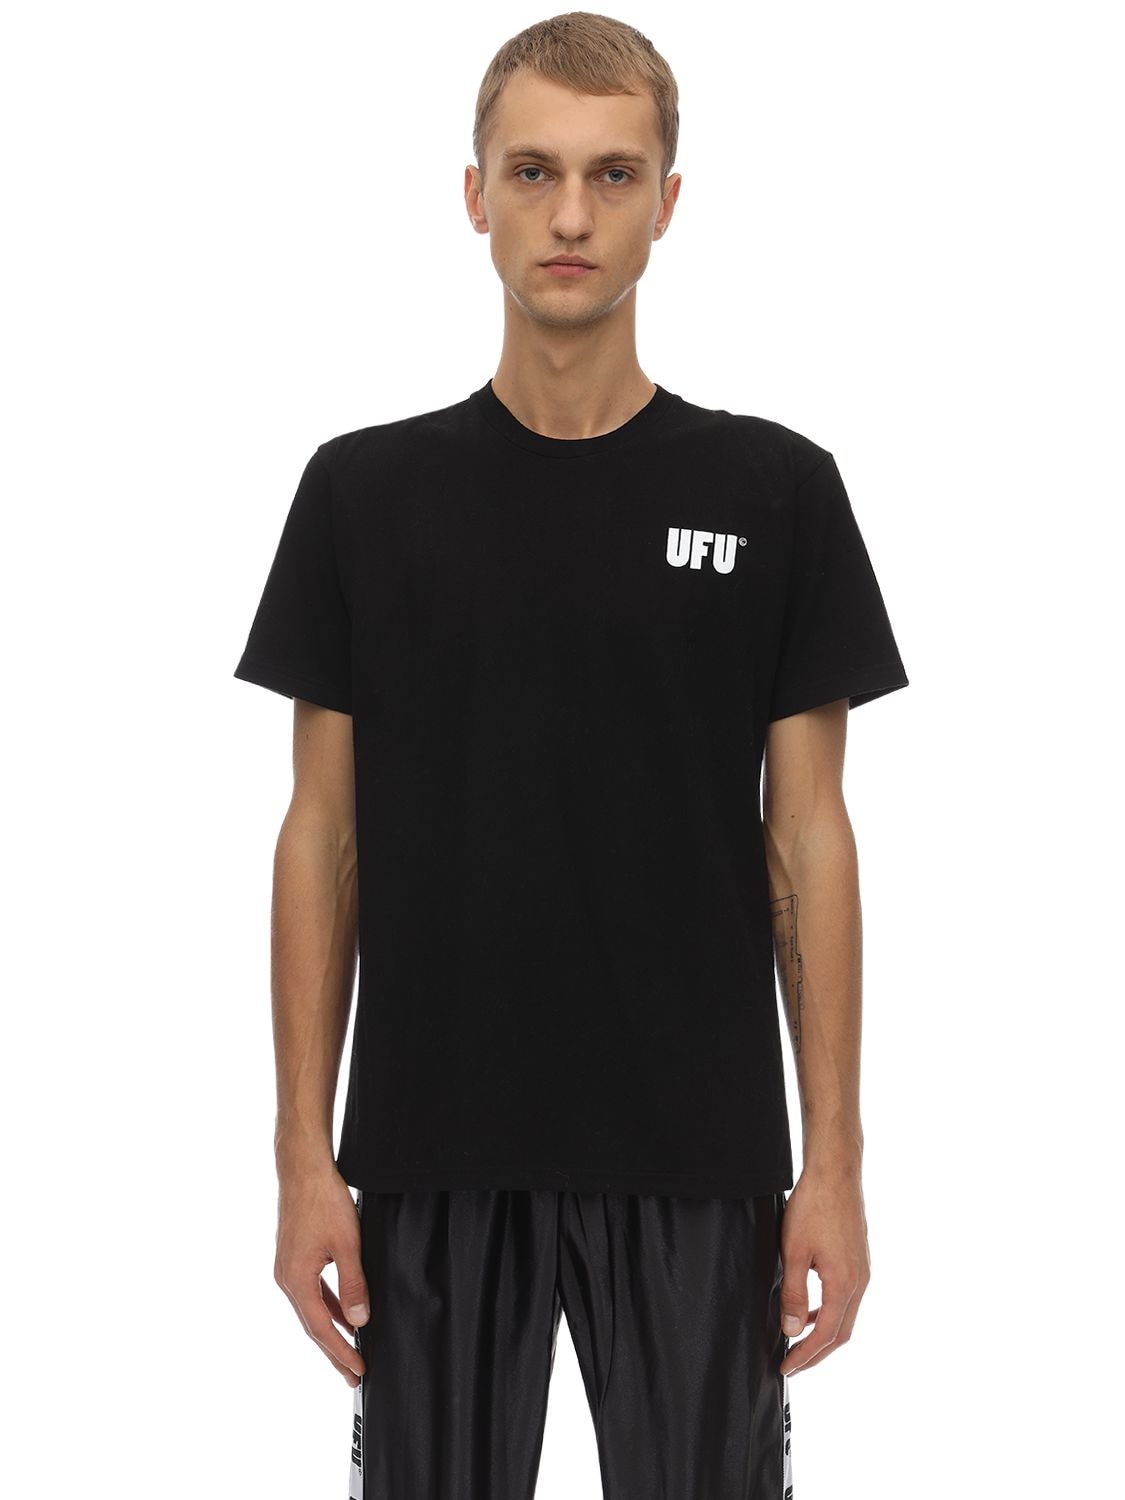 Ufu - Used Future Ufu Ad Cotton Jersey T-shirt In Black